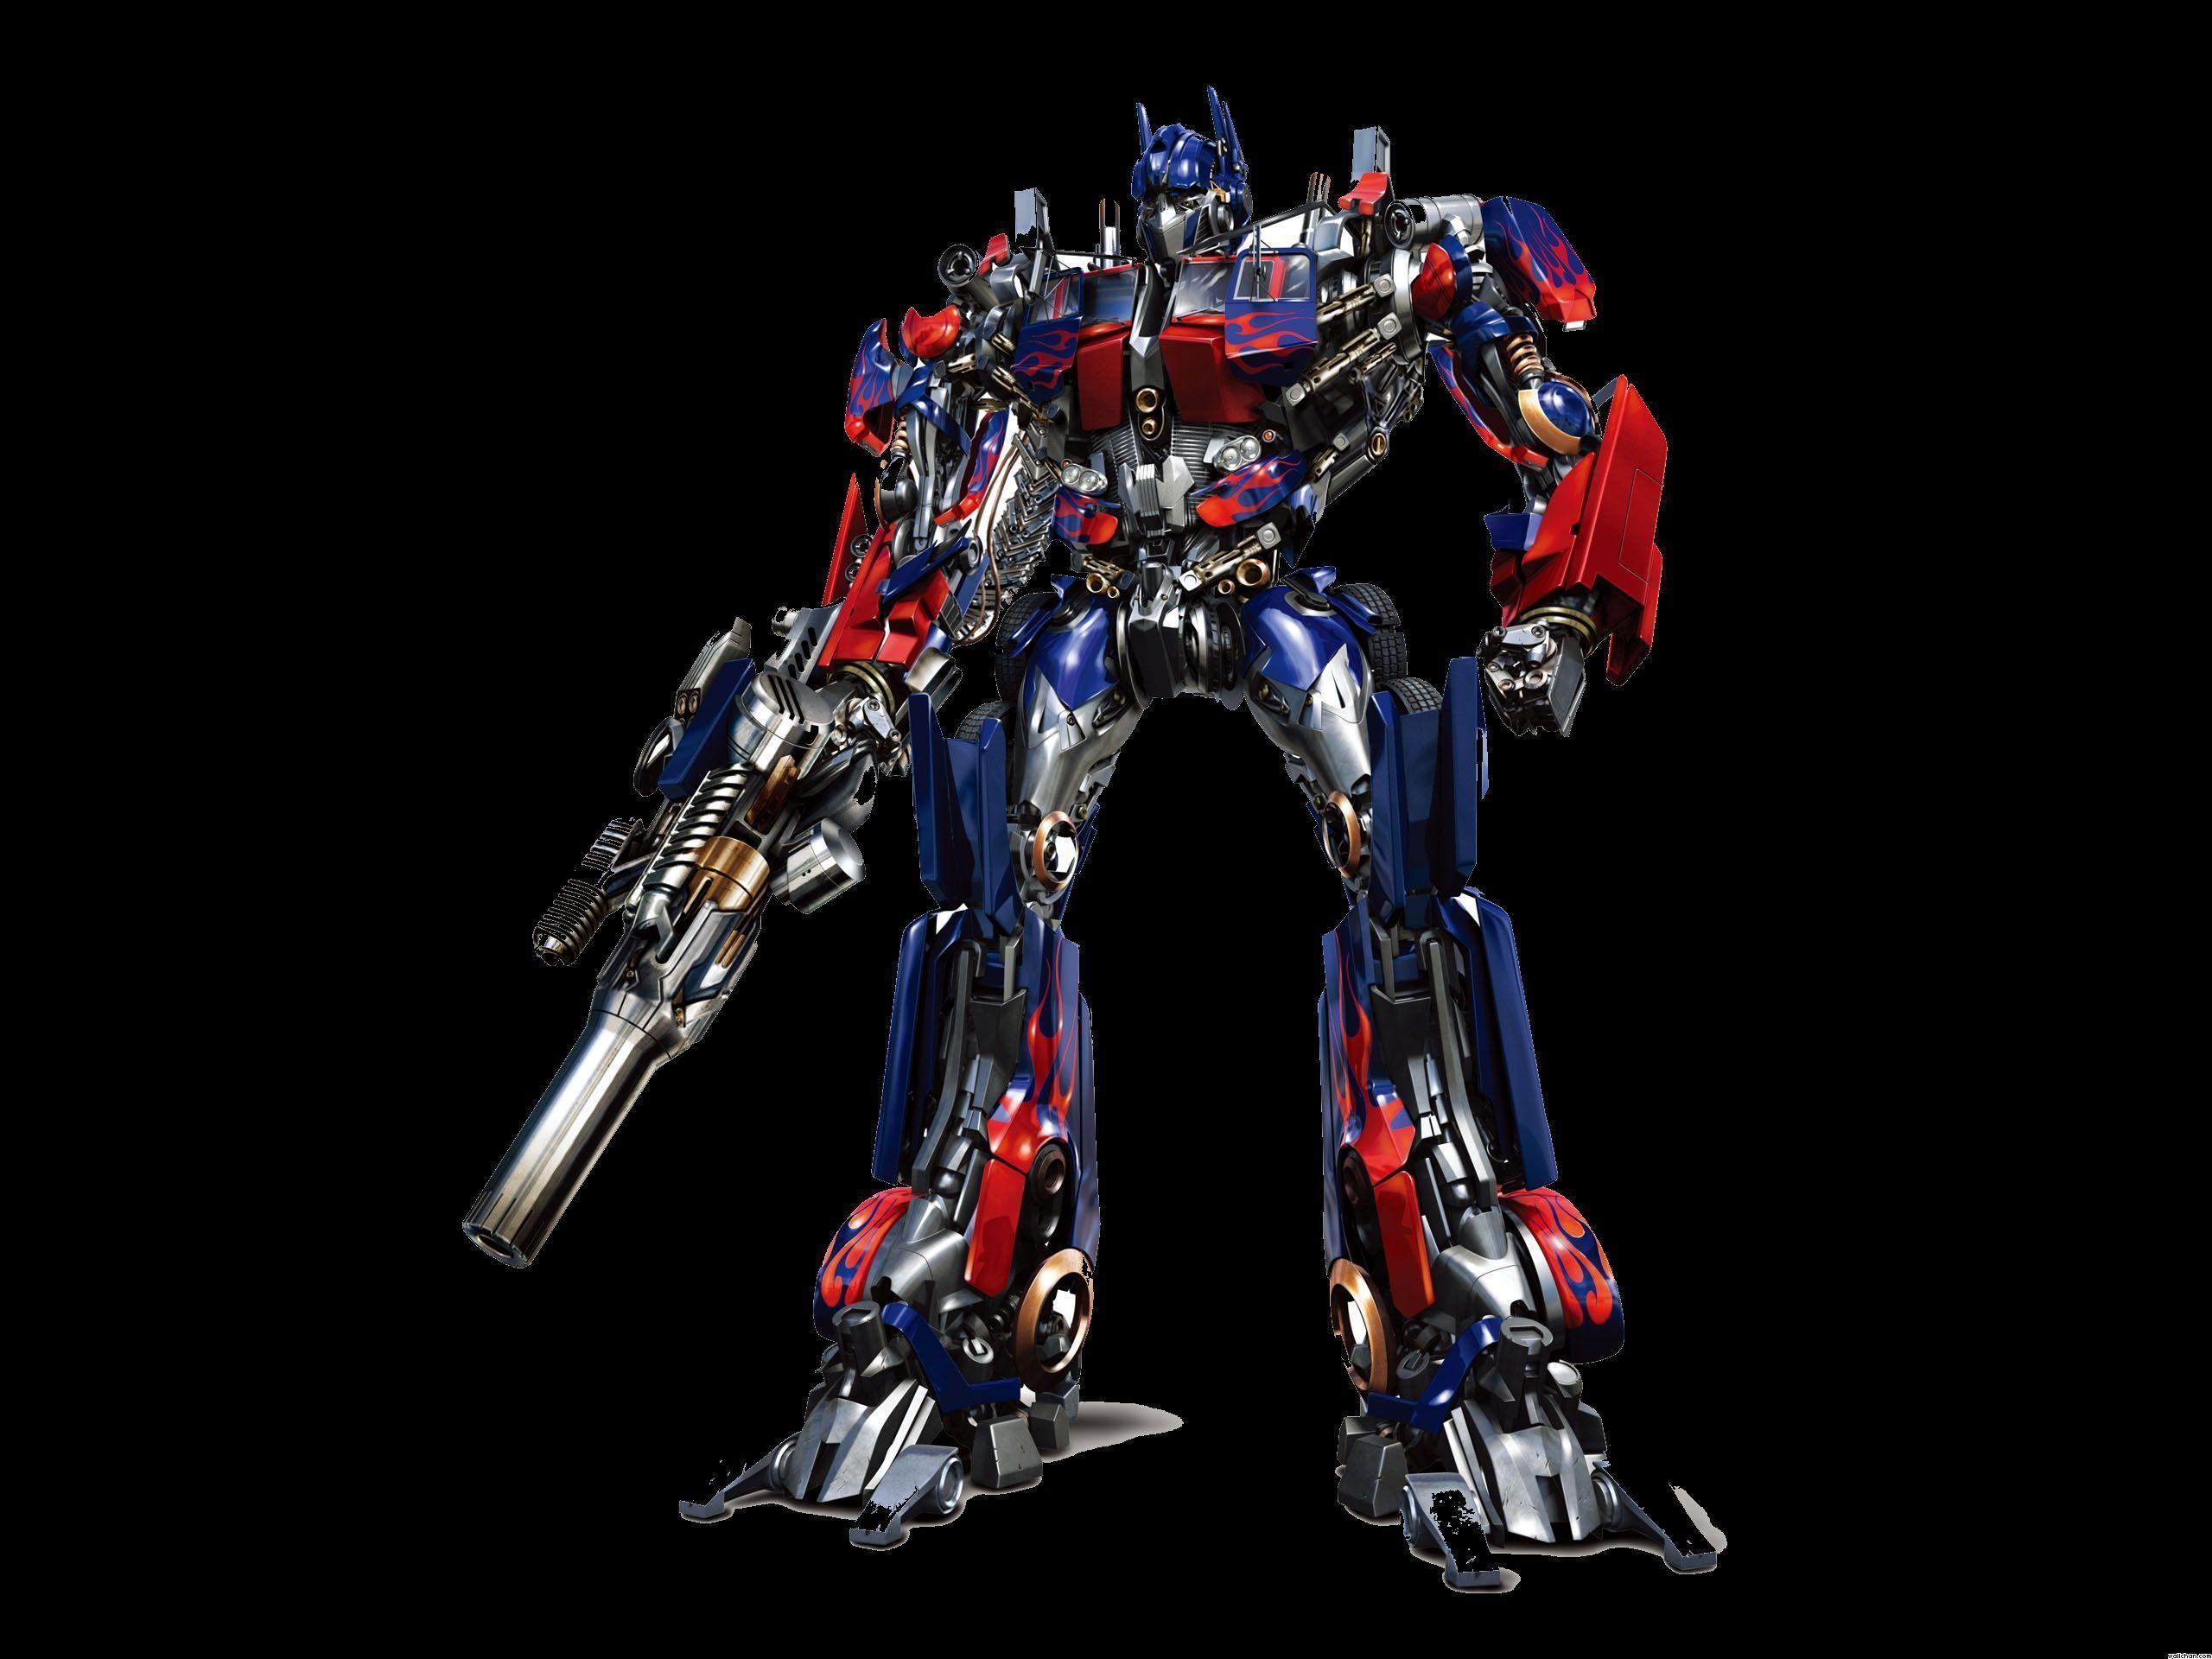 Free Download Transformers 2 Wallpaper Optimus Prime Picture